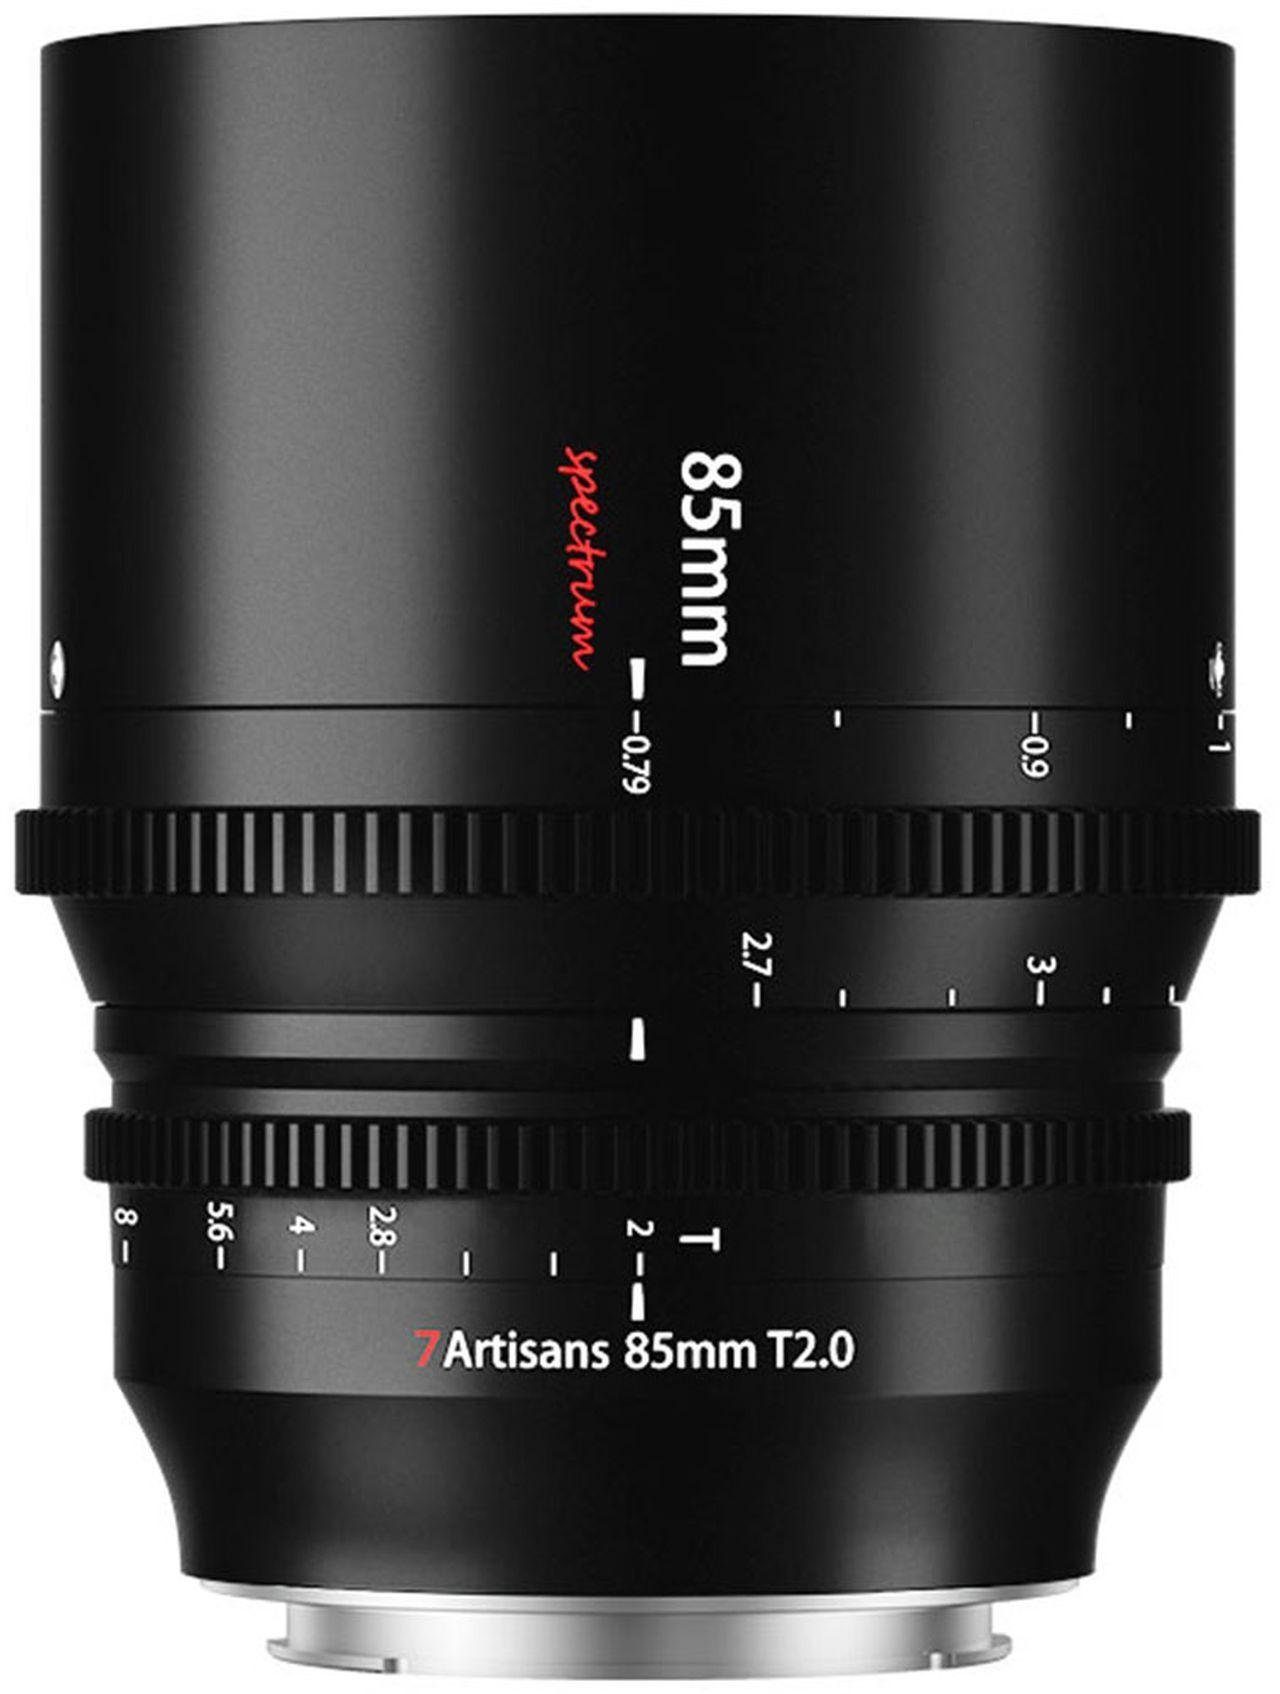 Nikon Z 85mm T2.0 Spectrum Zoomobjektiv 7Artisans